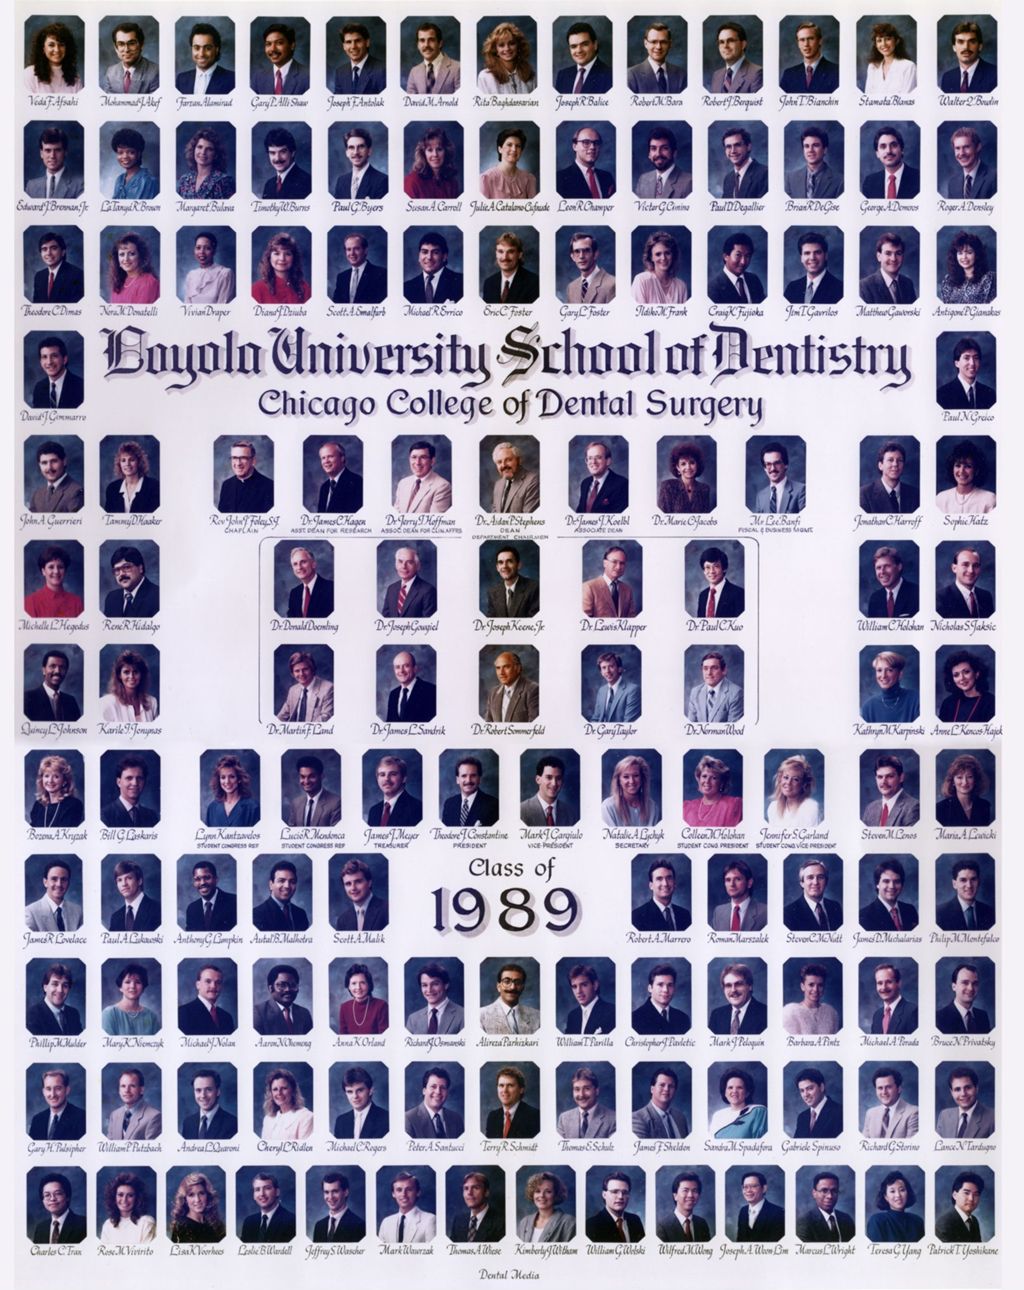 1989 graduating class, Loyola University School of Dentistry, Chicago College of Dental Surgery